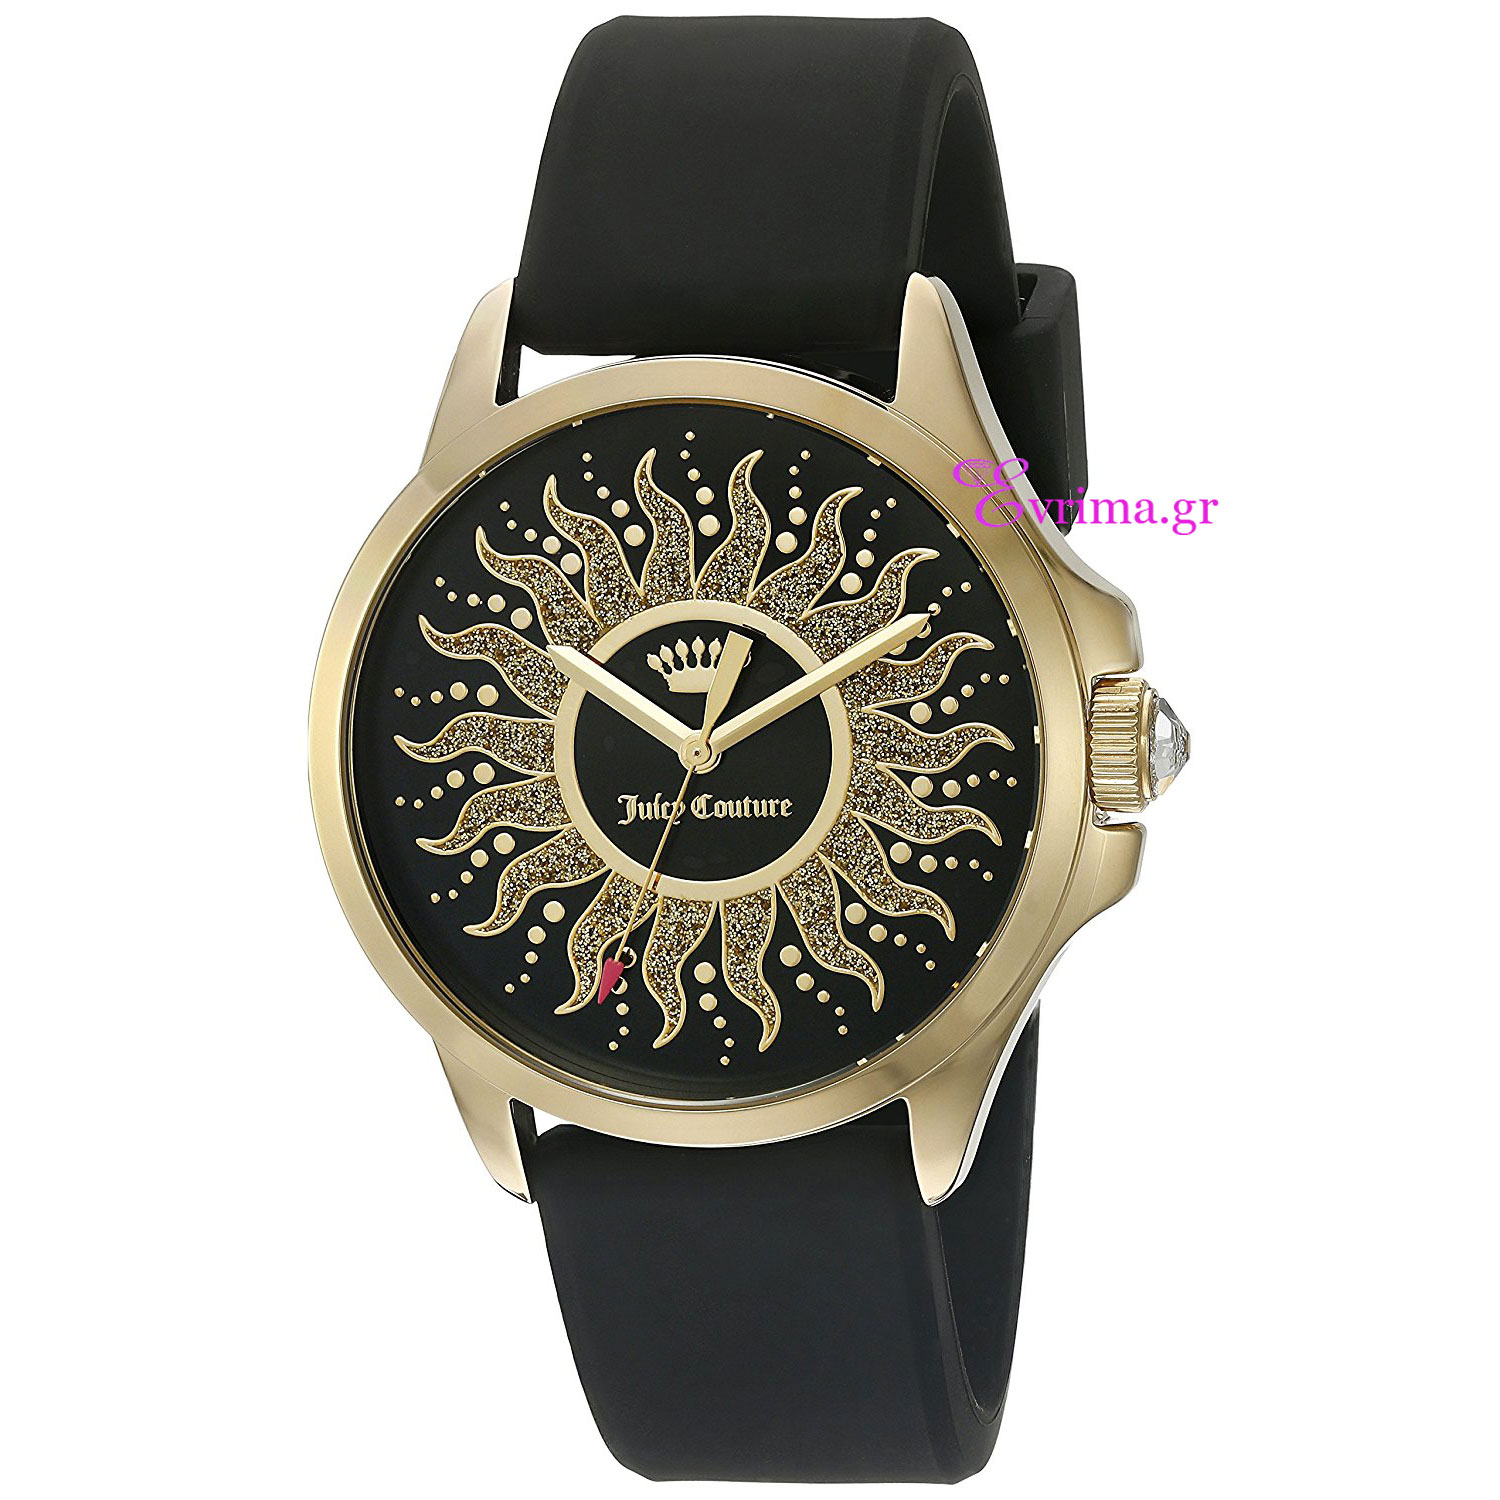 Juicy Couture Black Label bling crystal embellished gold-tone bracelet watch  | eBay